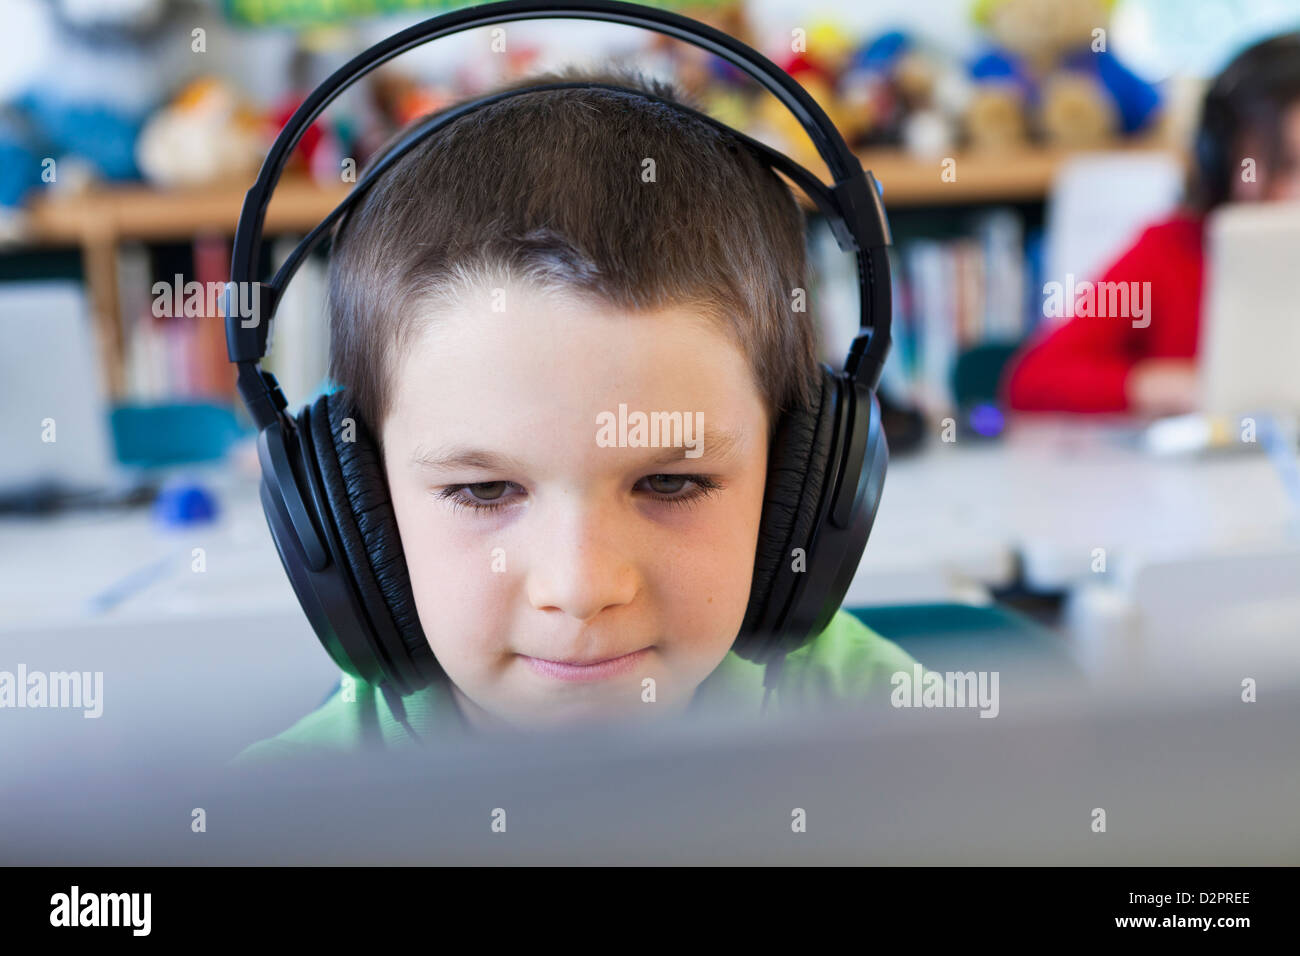 Caucasian student in headphones using laptop in classroom Banque D'Images